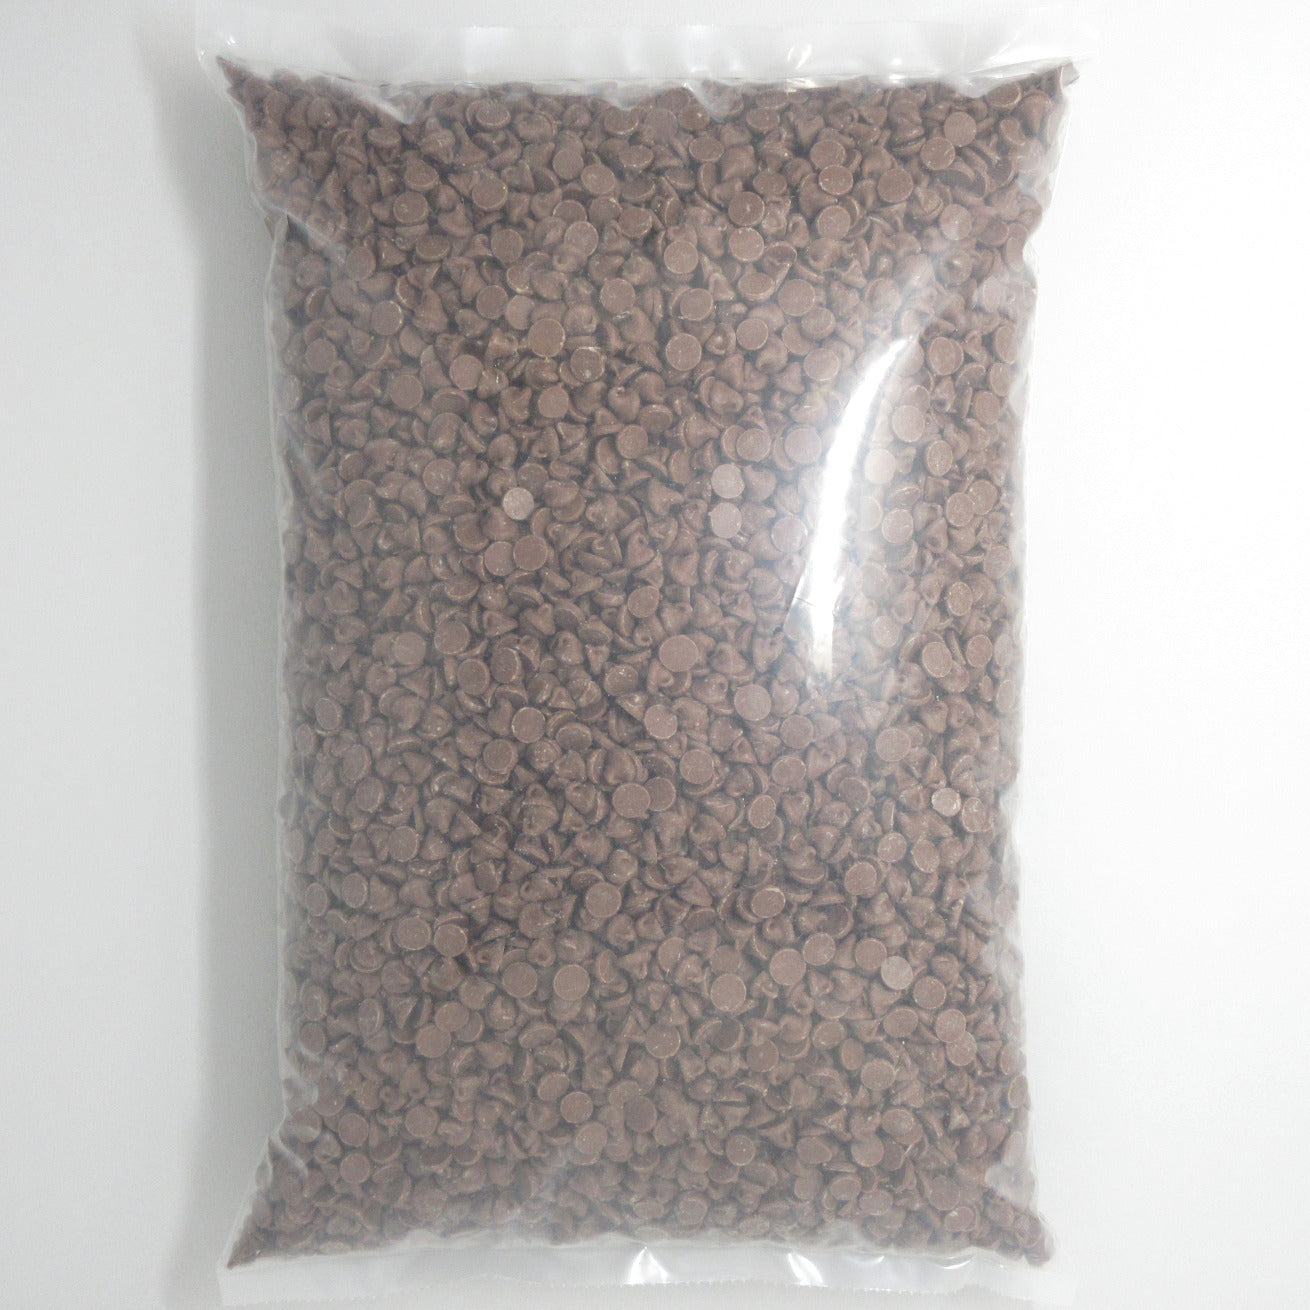 Flour Barrel product image - Milk Chocolate Chips